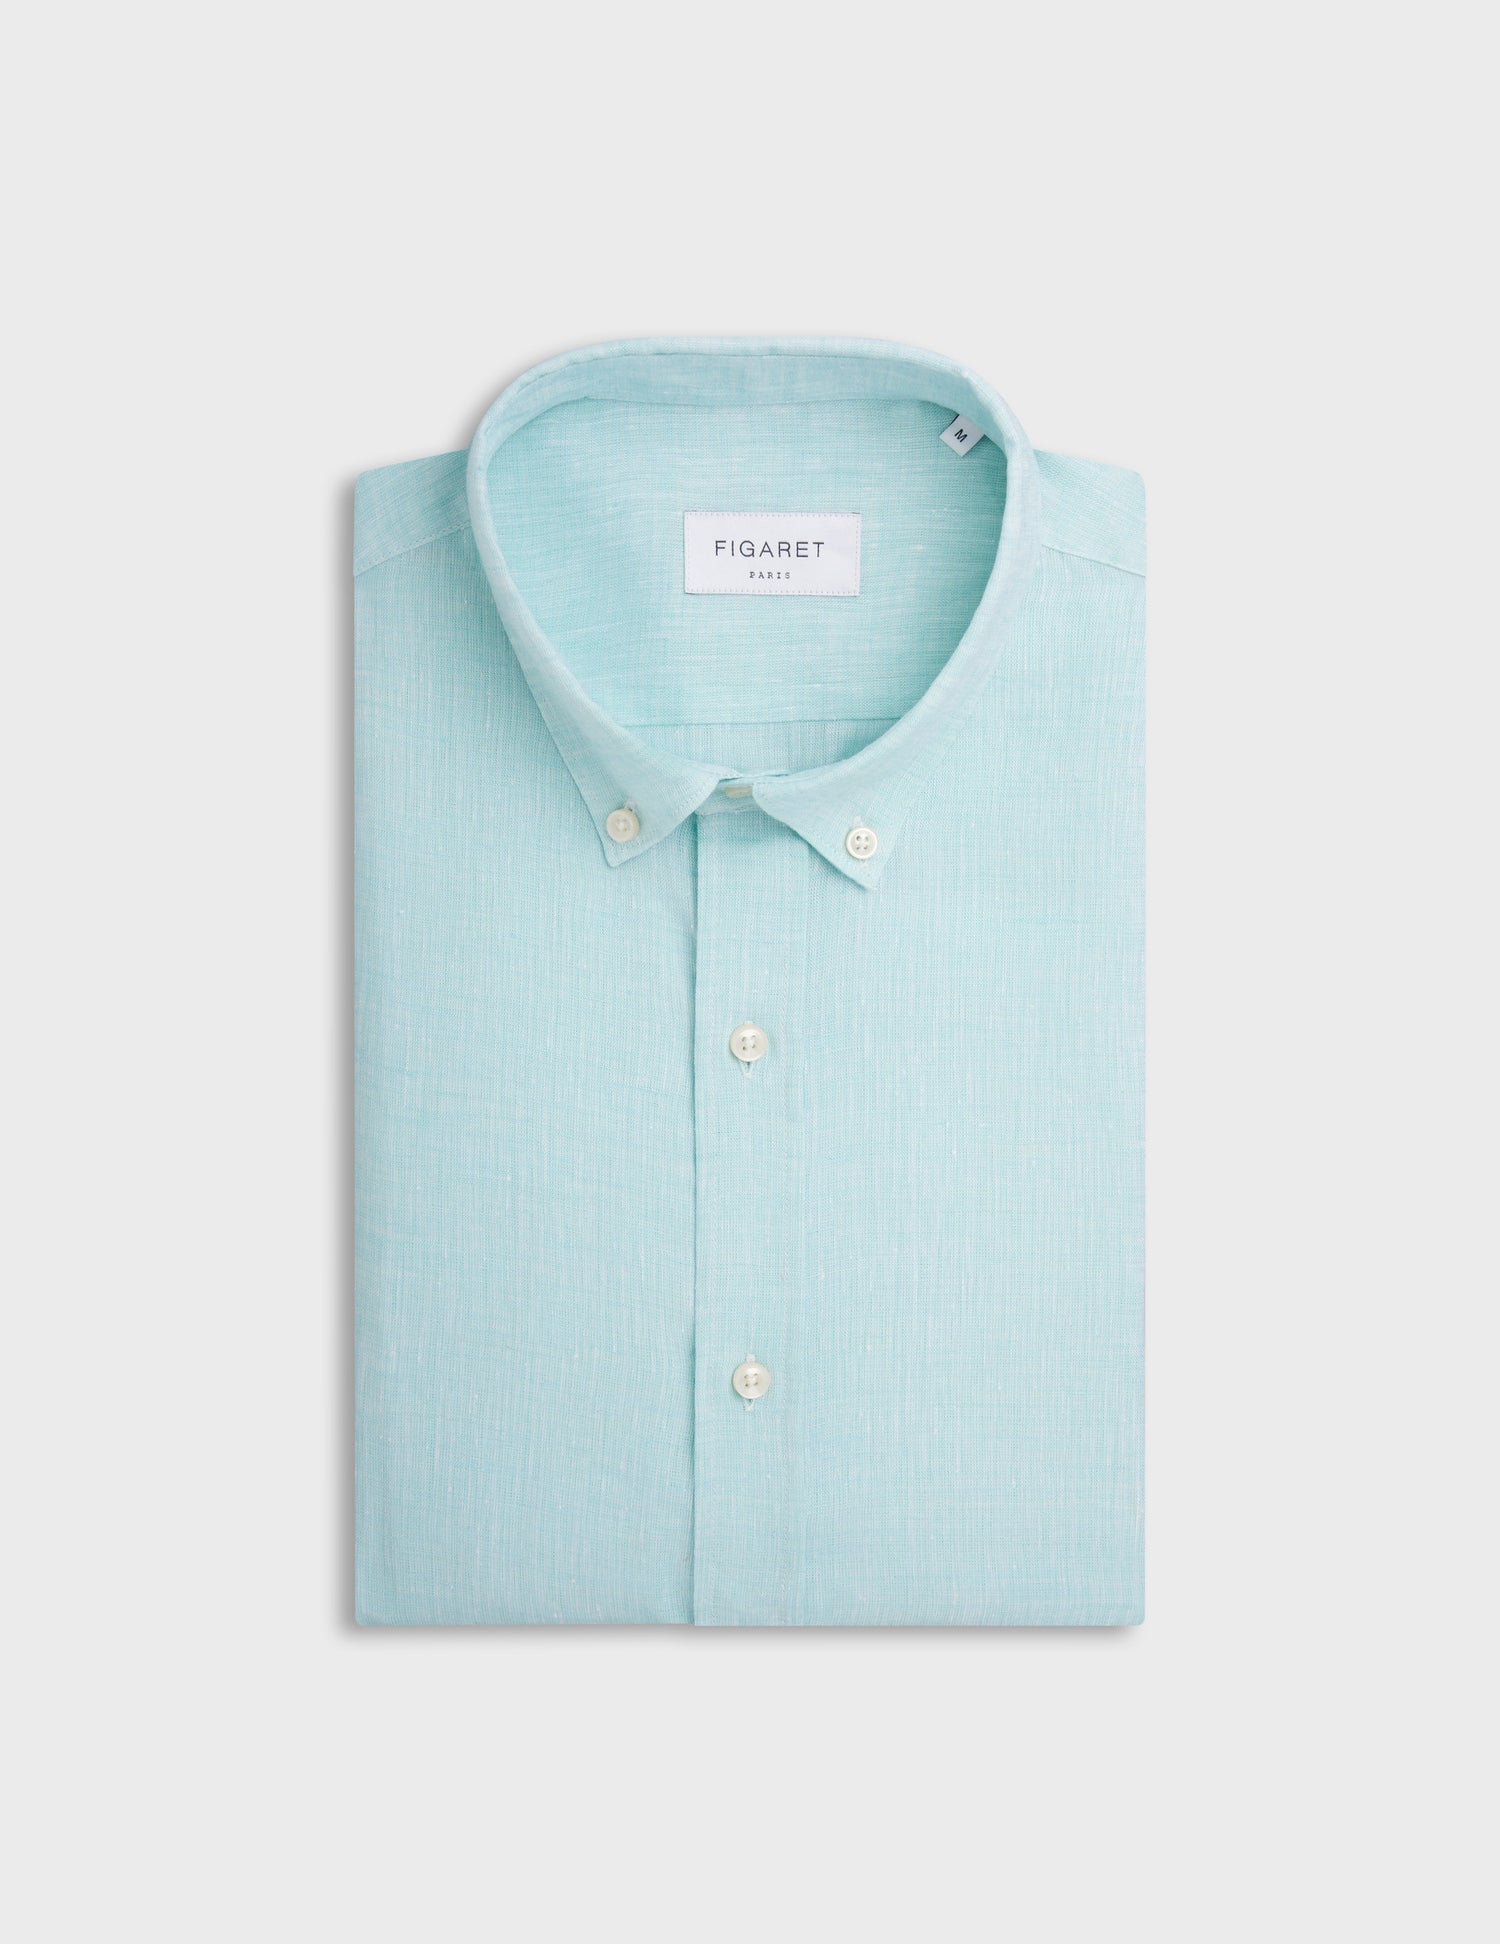 Gaspard shirt in turquoise green linen - Linen - American Collar#4